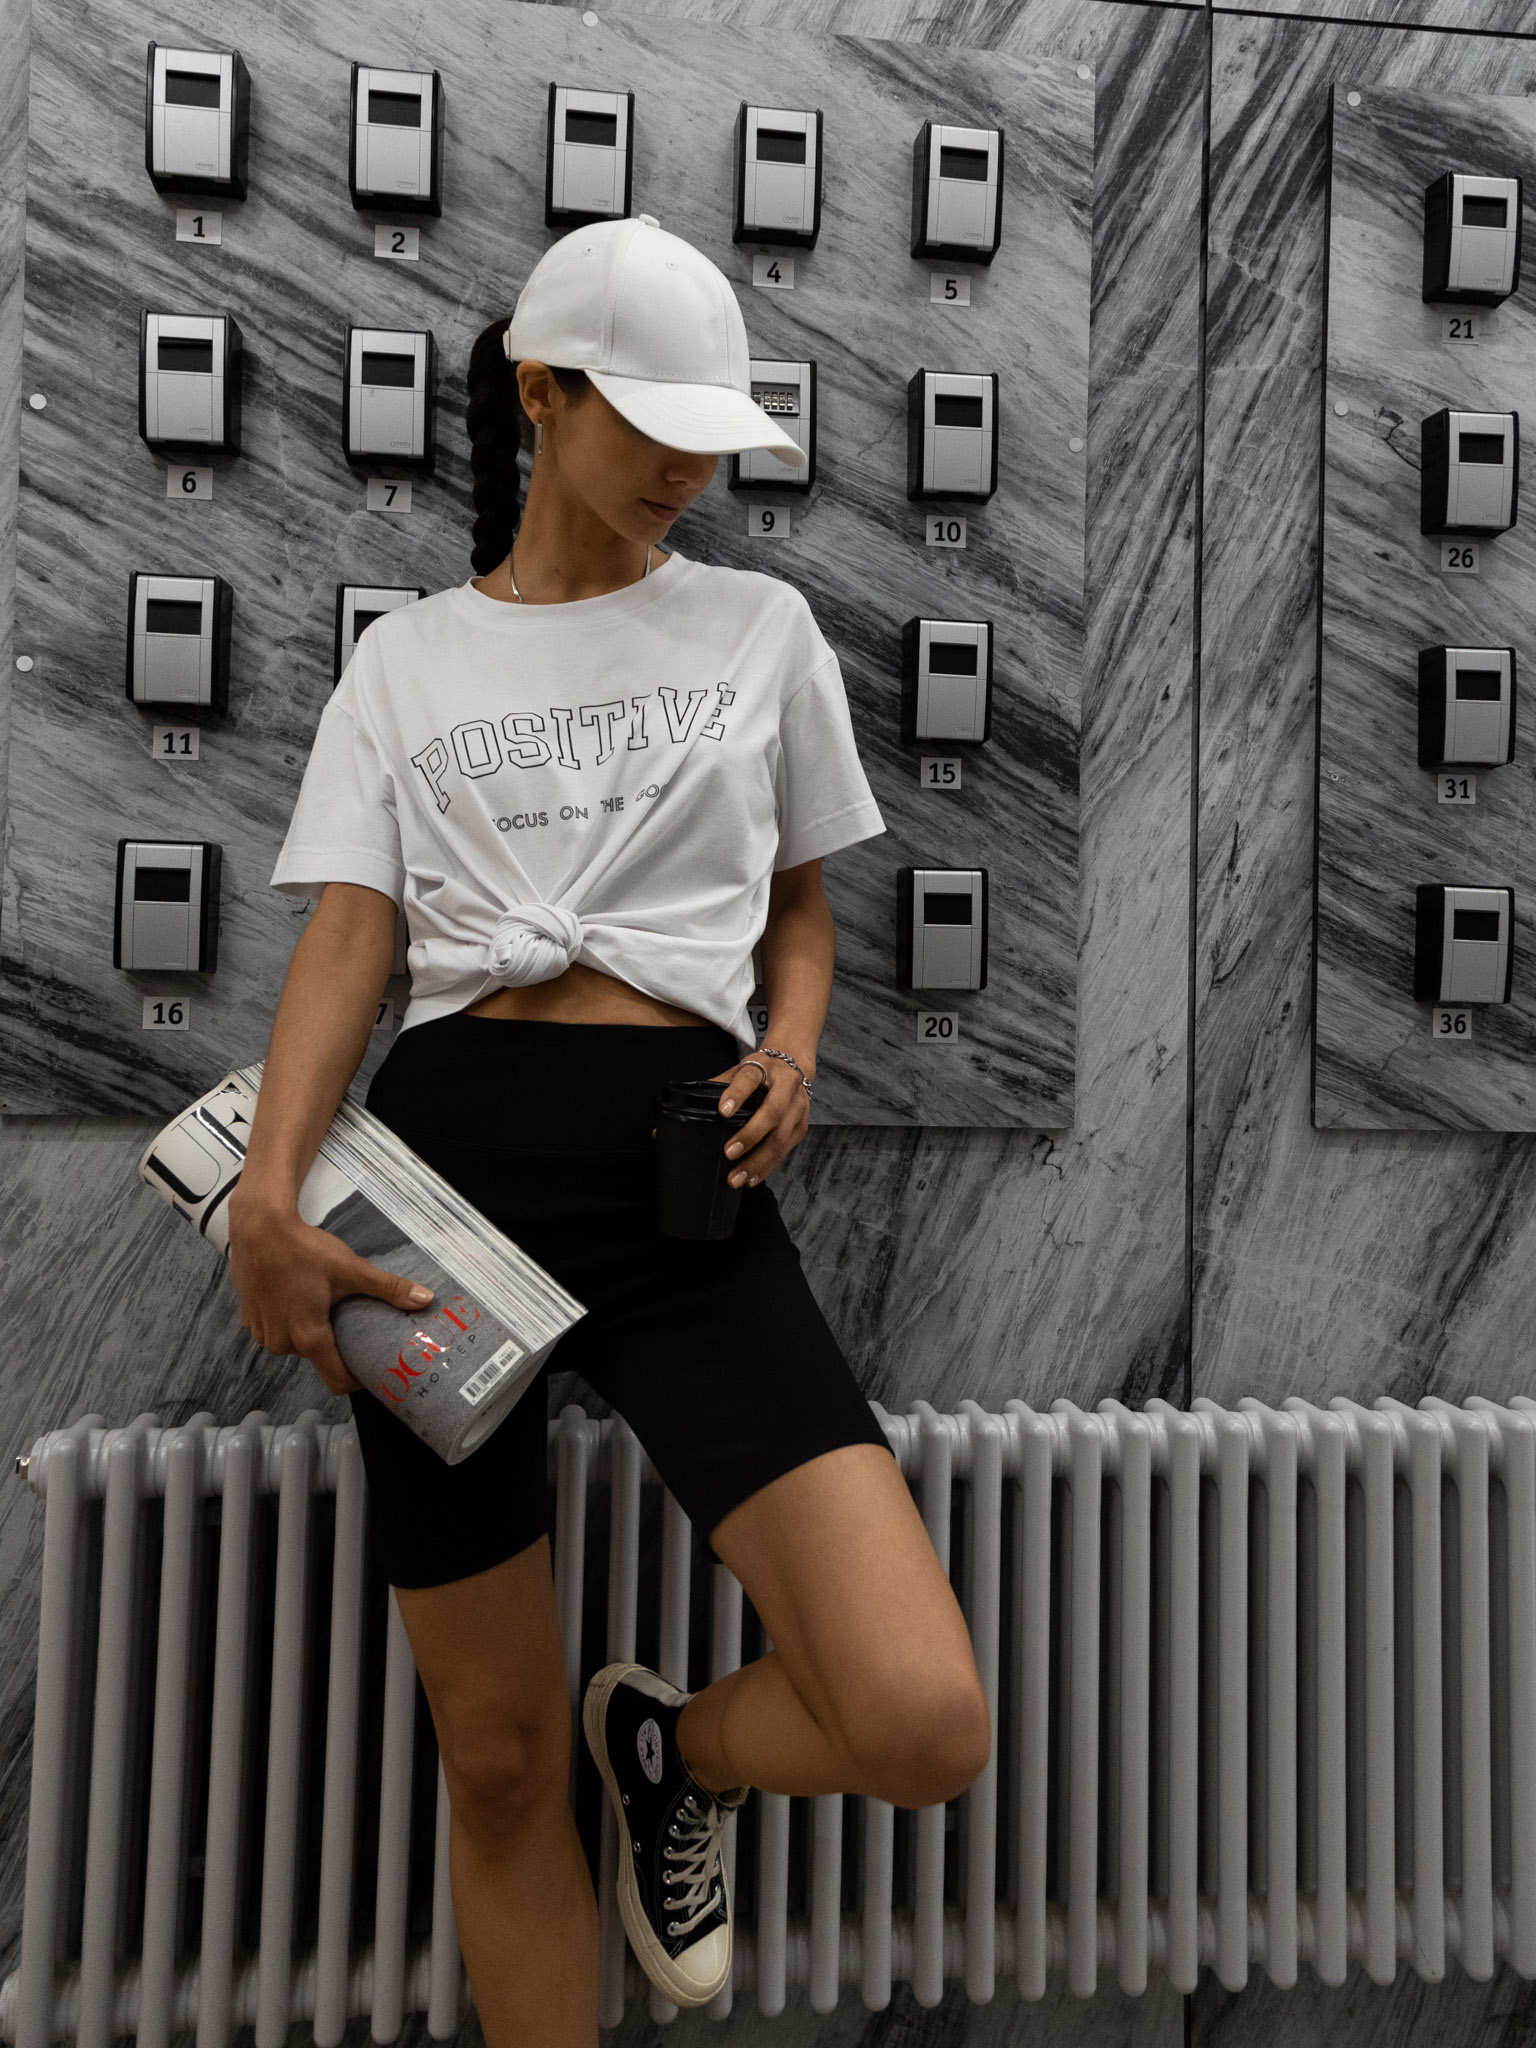 Cotton shirt with a text print :: LICHI - Online fashion store